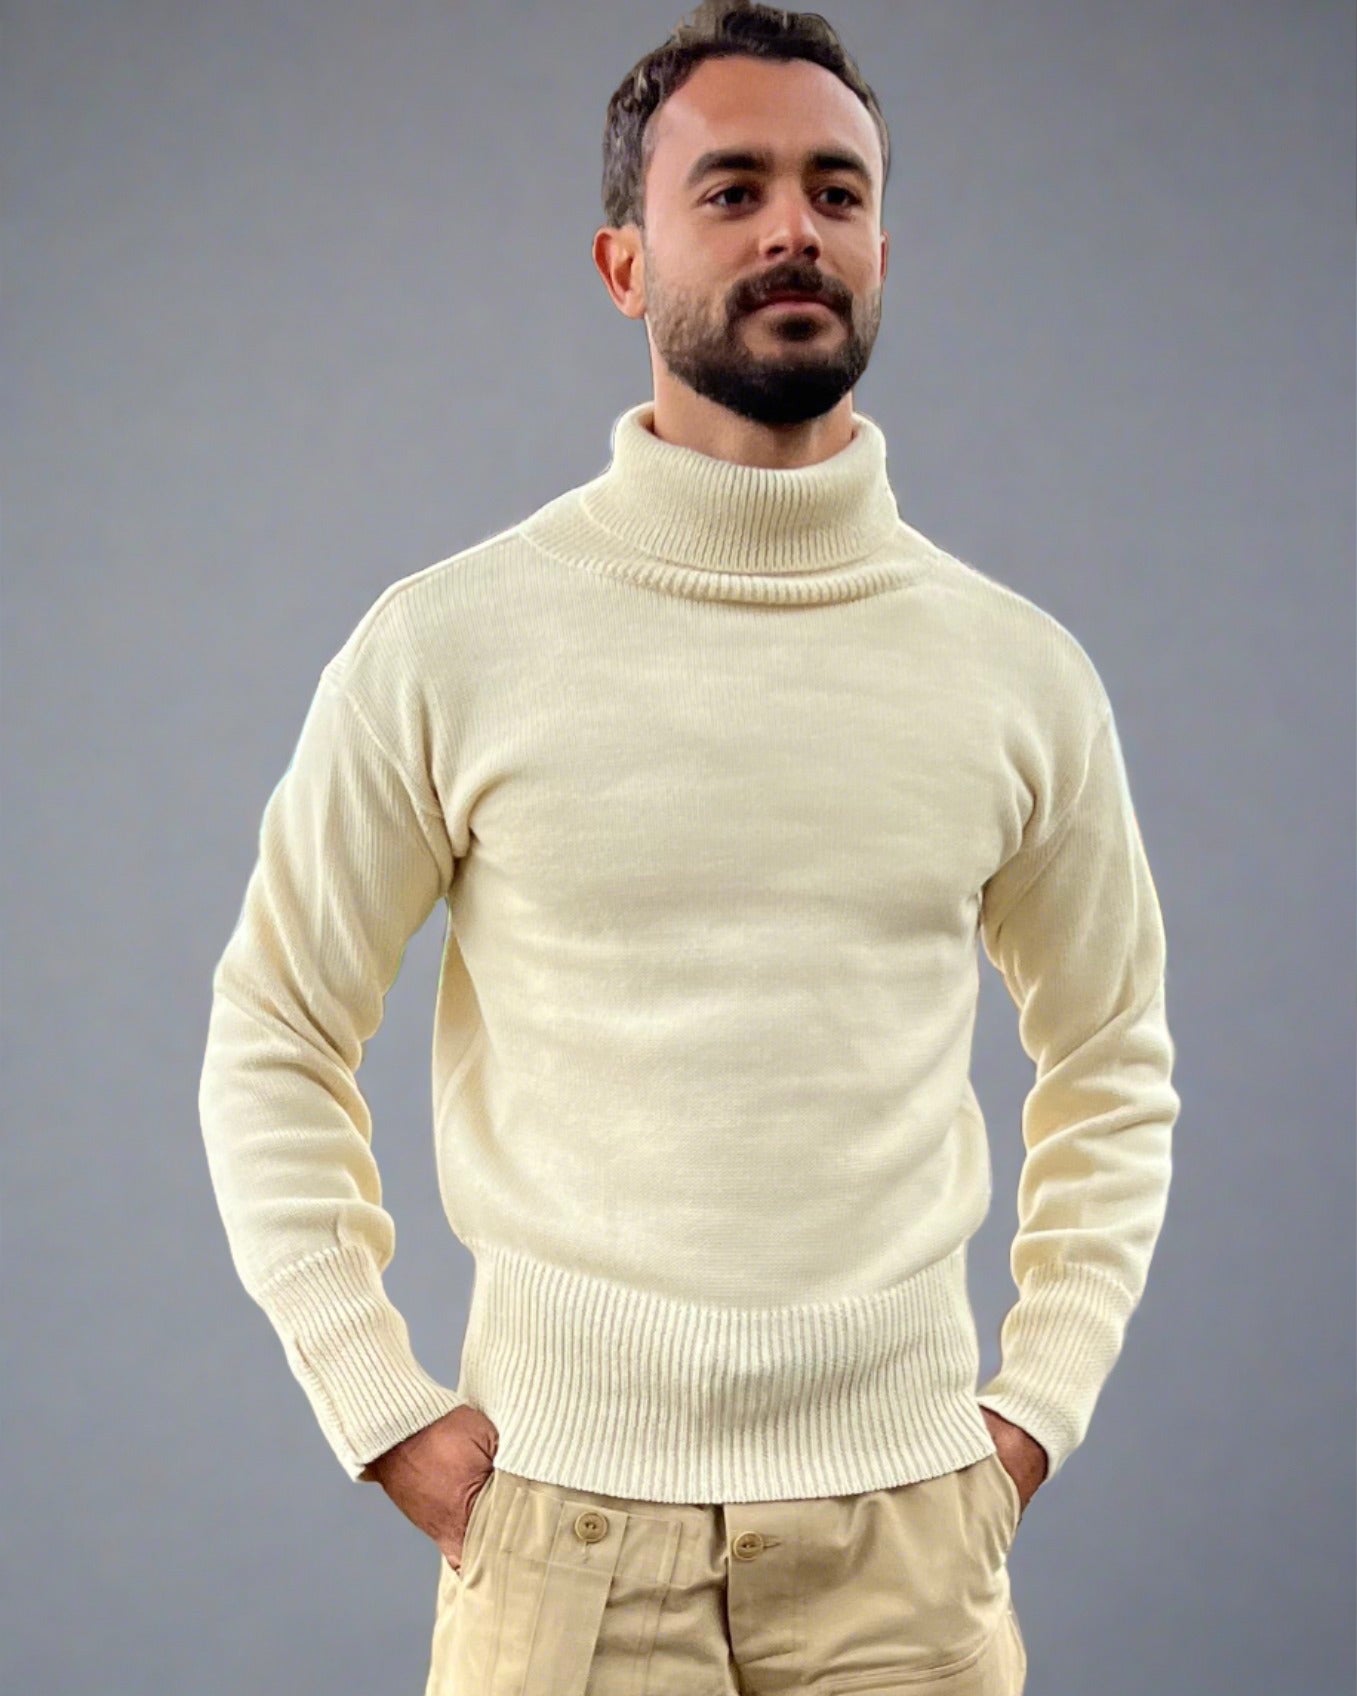 Submariner Sweater, Polo Neck, Natural Cream, Chunky Wool - THE NAUTICAL  COMPANY UK